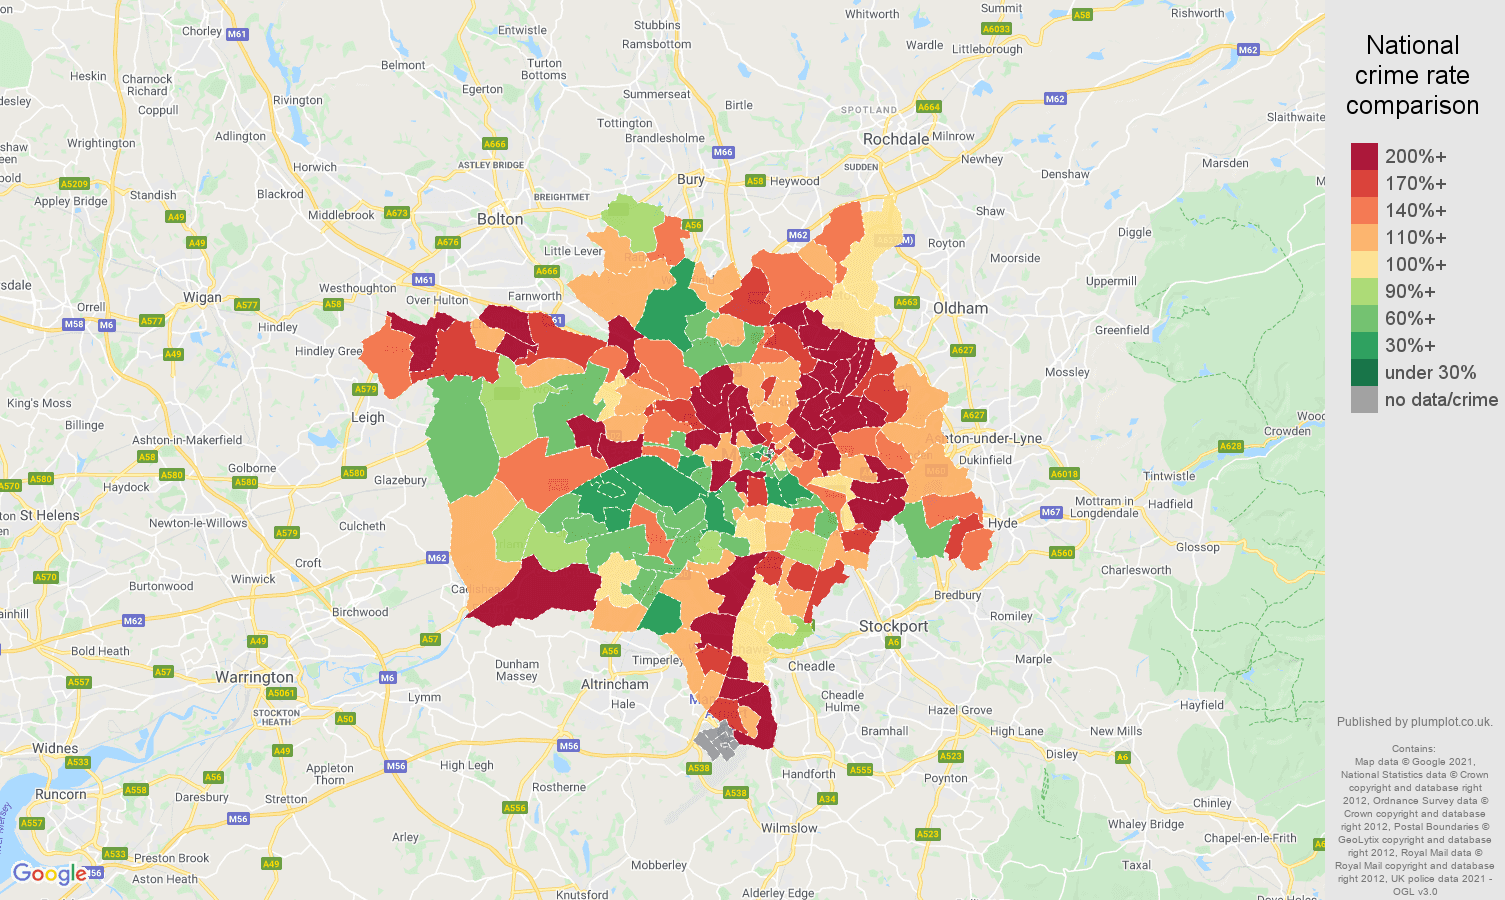 Manchester criminal damage and arson crime rate comparison map